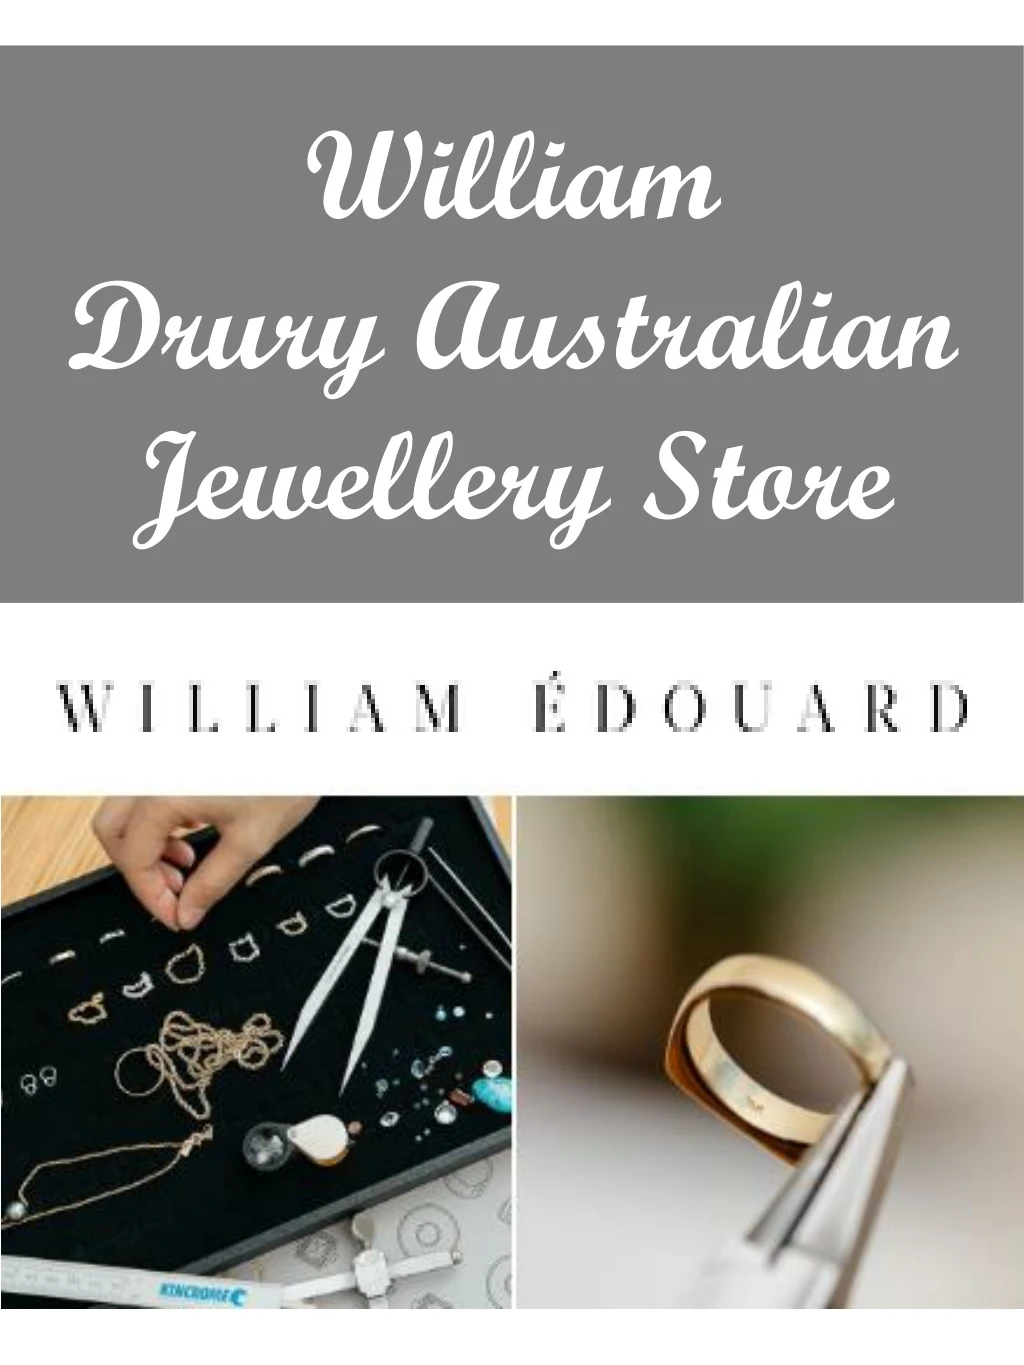 william drury australian jewellery store